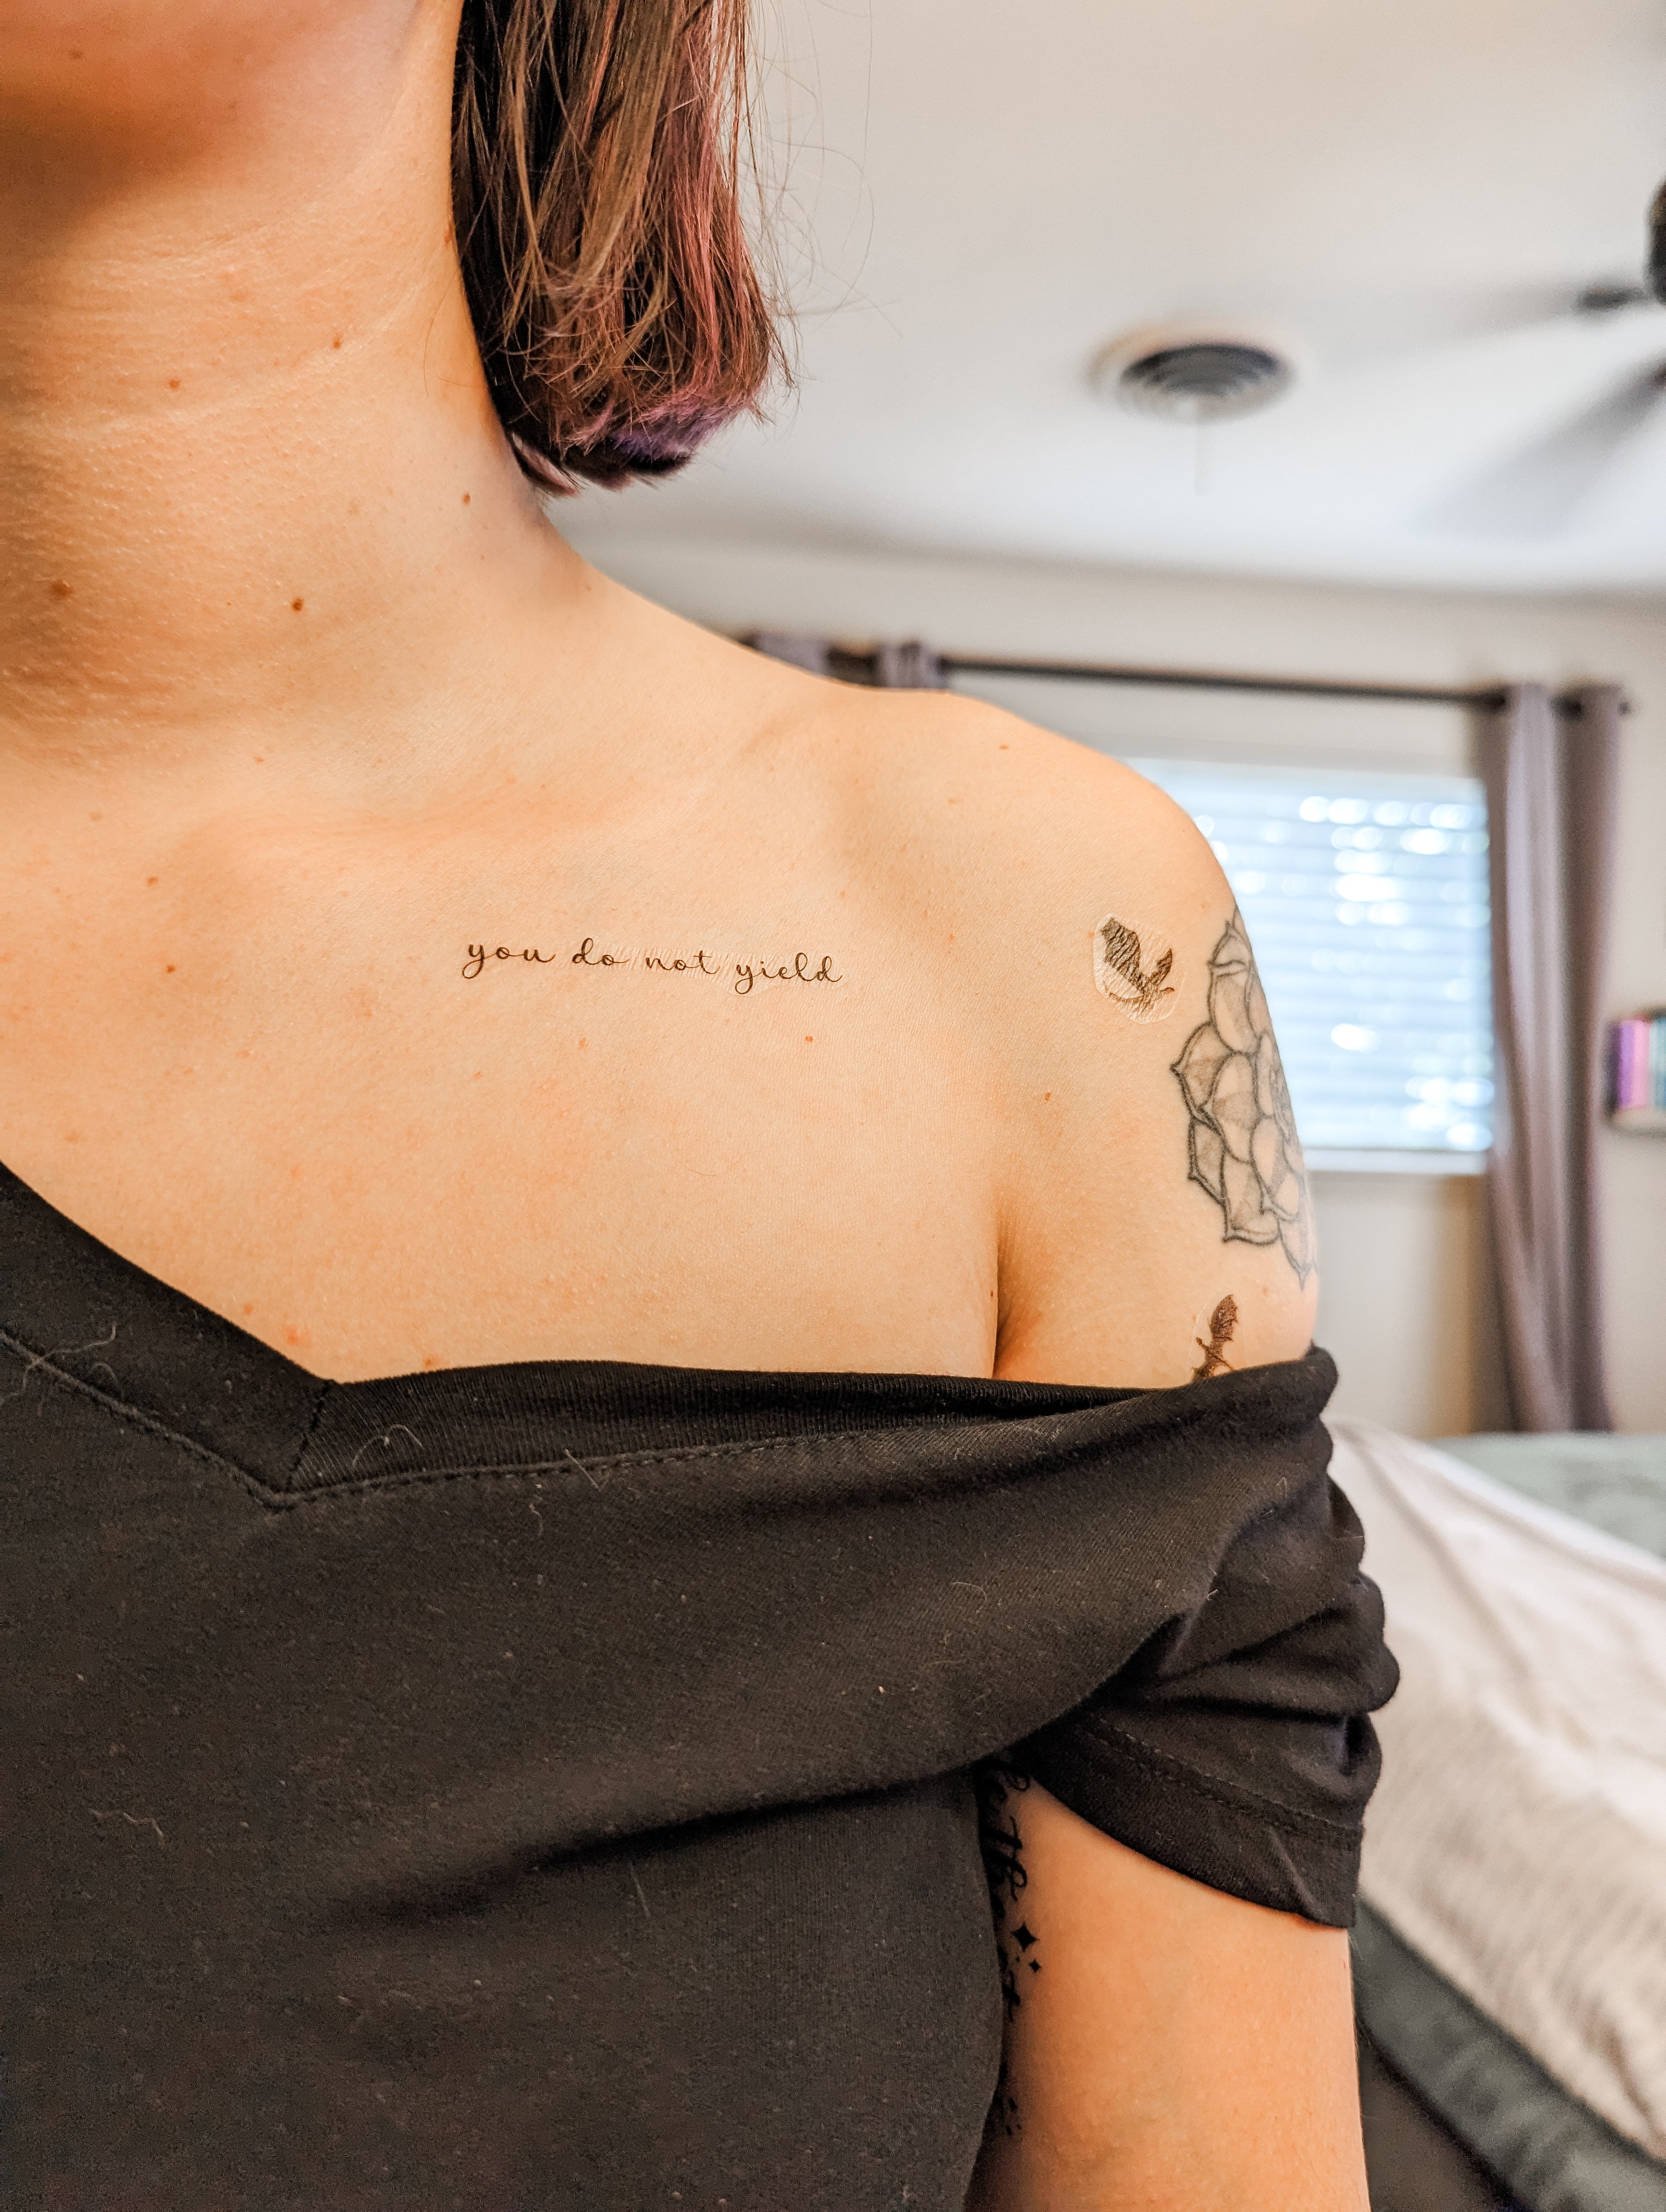 Sarah J Maas tattoo Throne of glass tattoo  Tattoo quotes Bookish tattoos  Tattoos for women